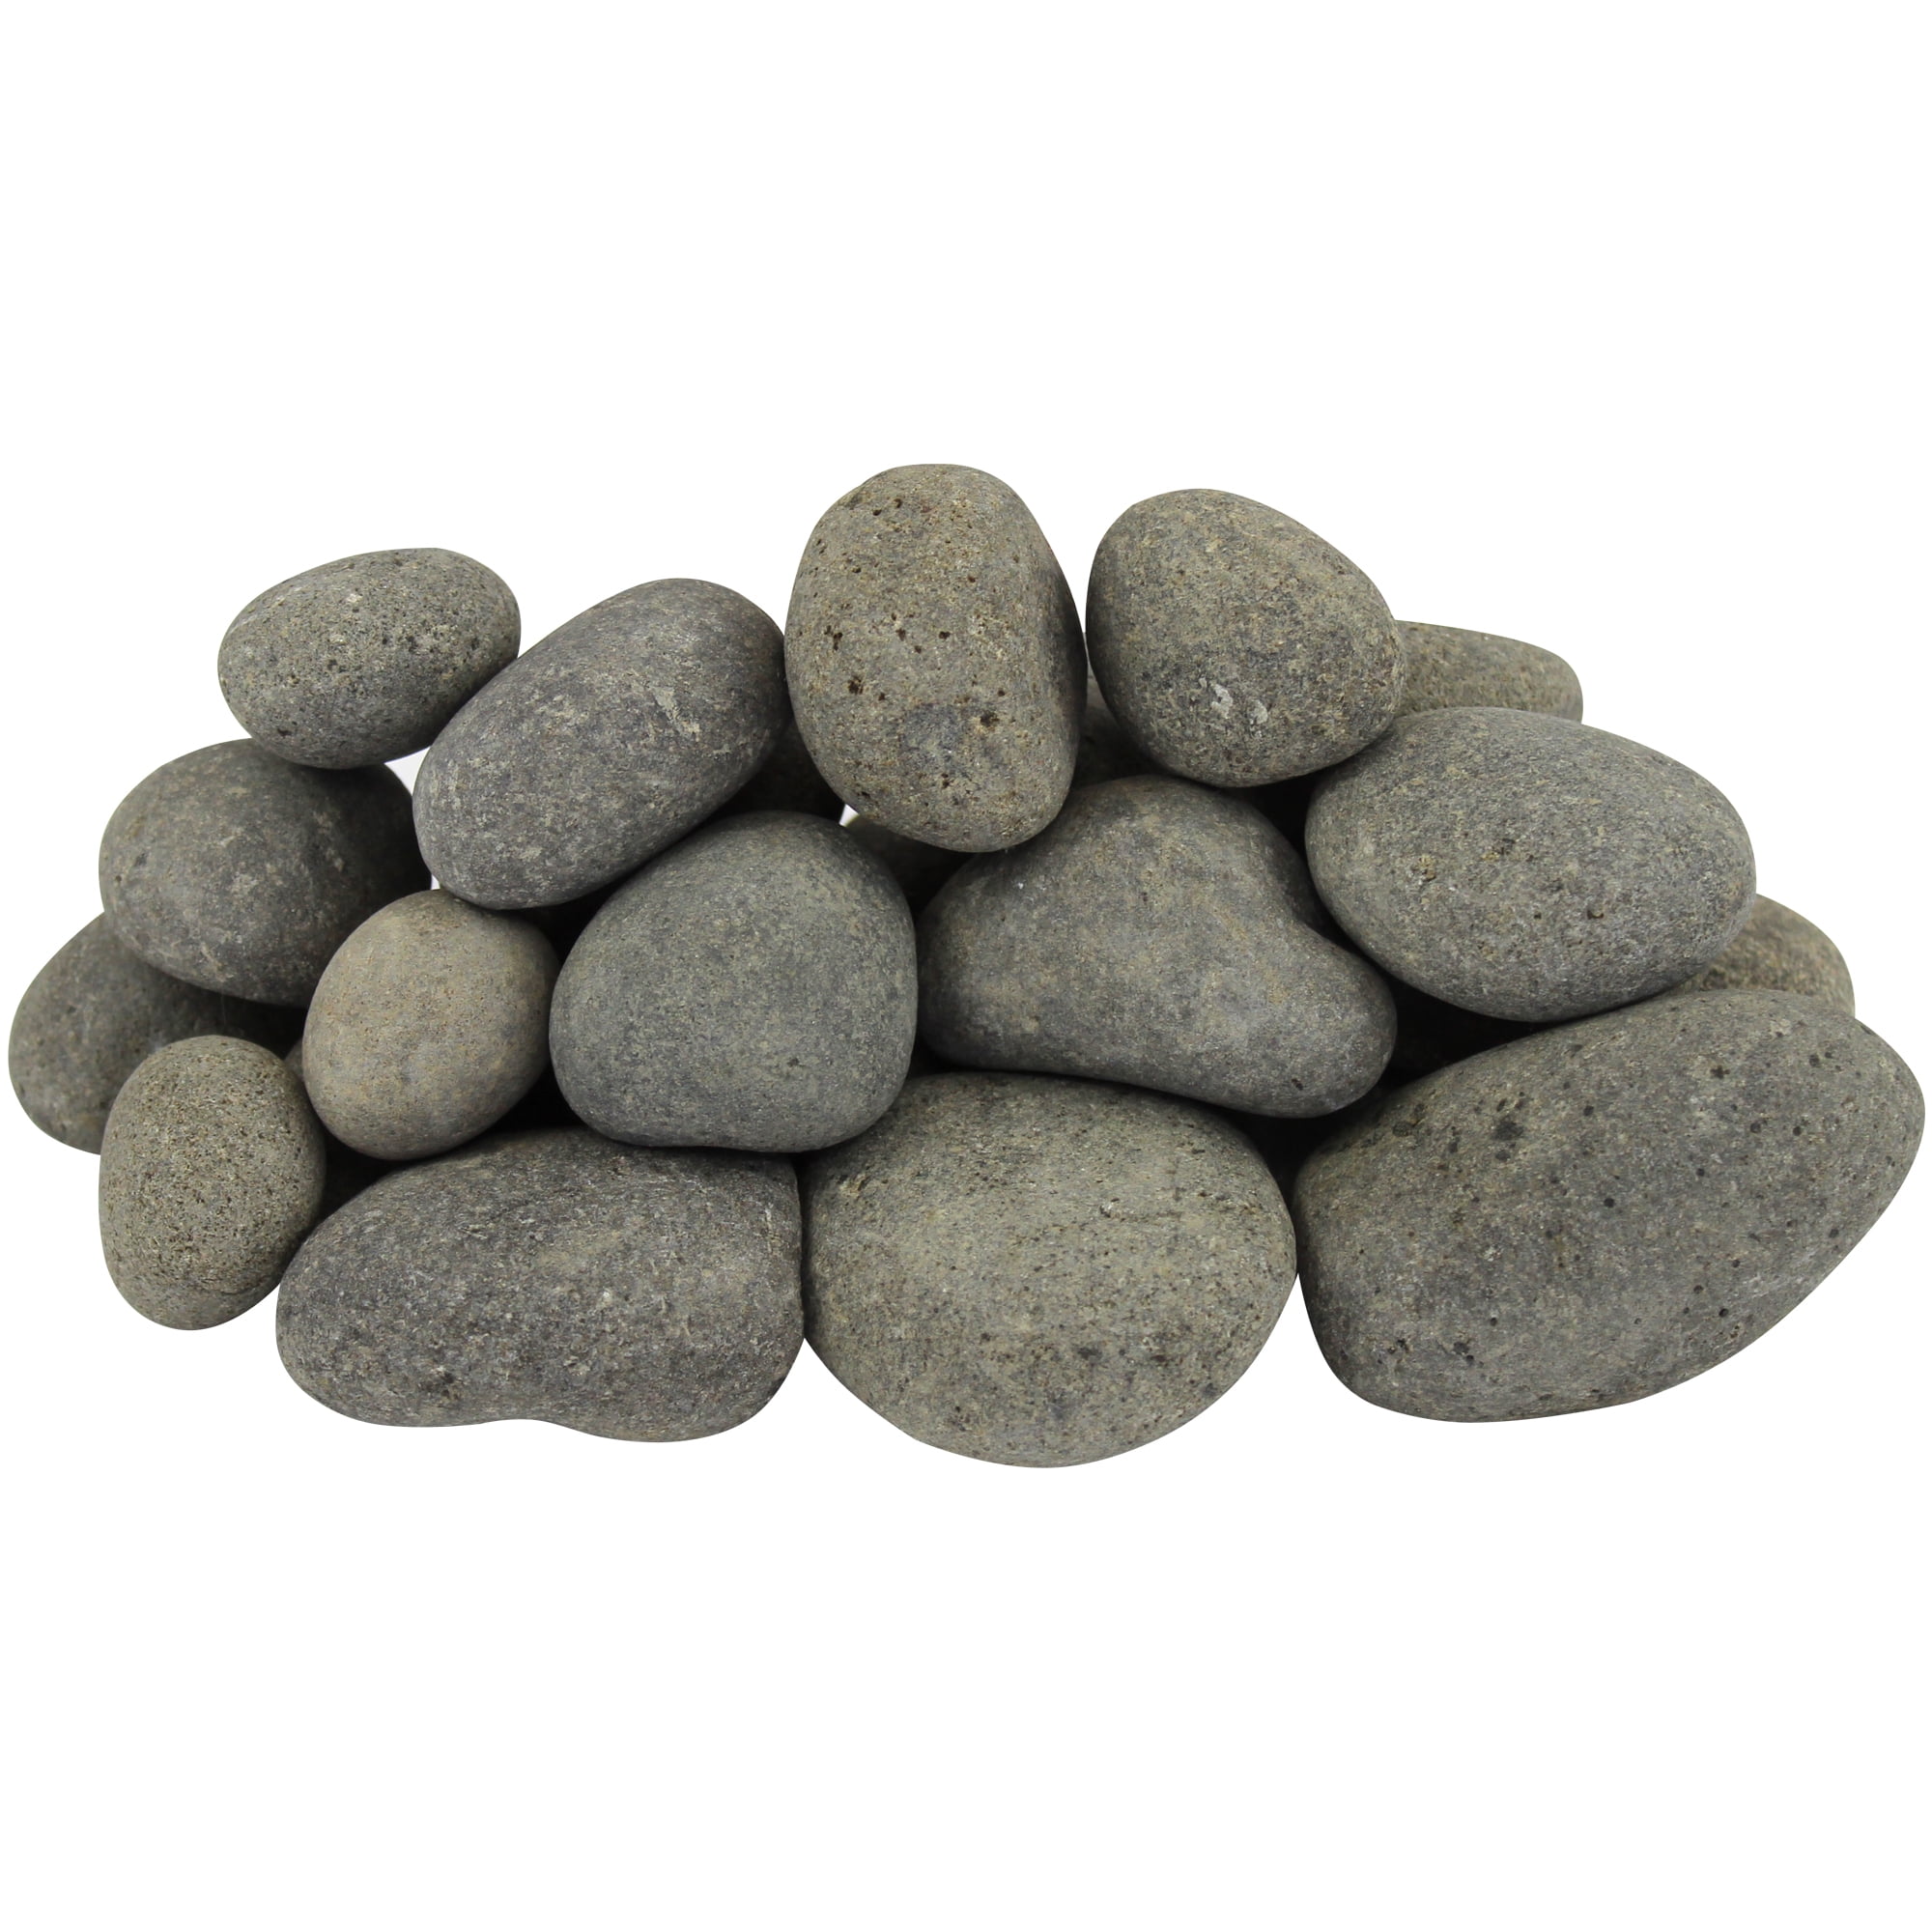 Buy Grey Caribbean River Pebbles 1 in. to 3 in., 30 lb. at Walmart.com.